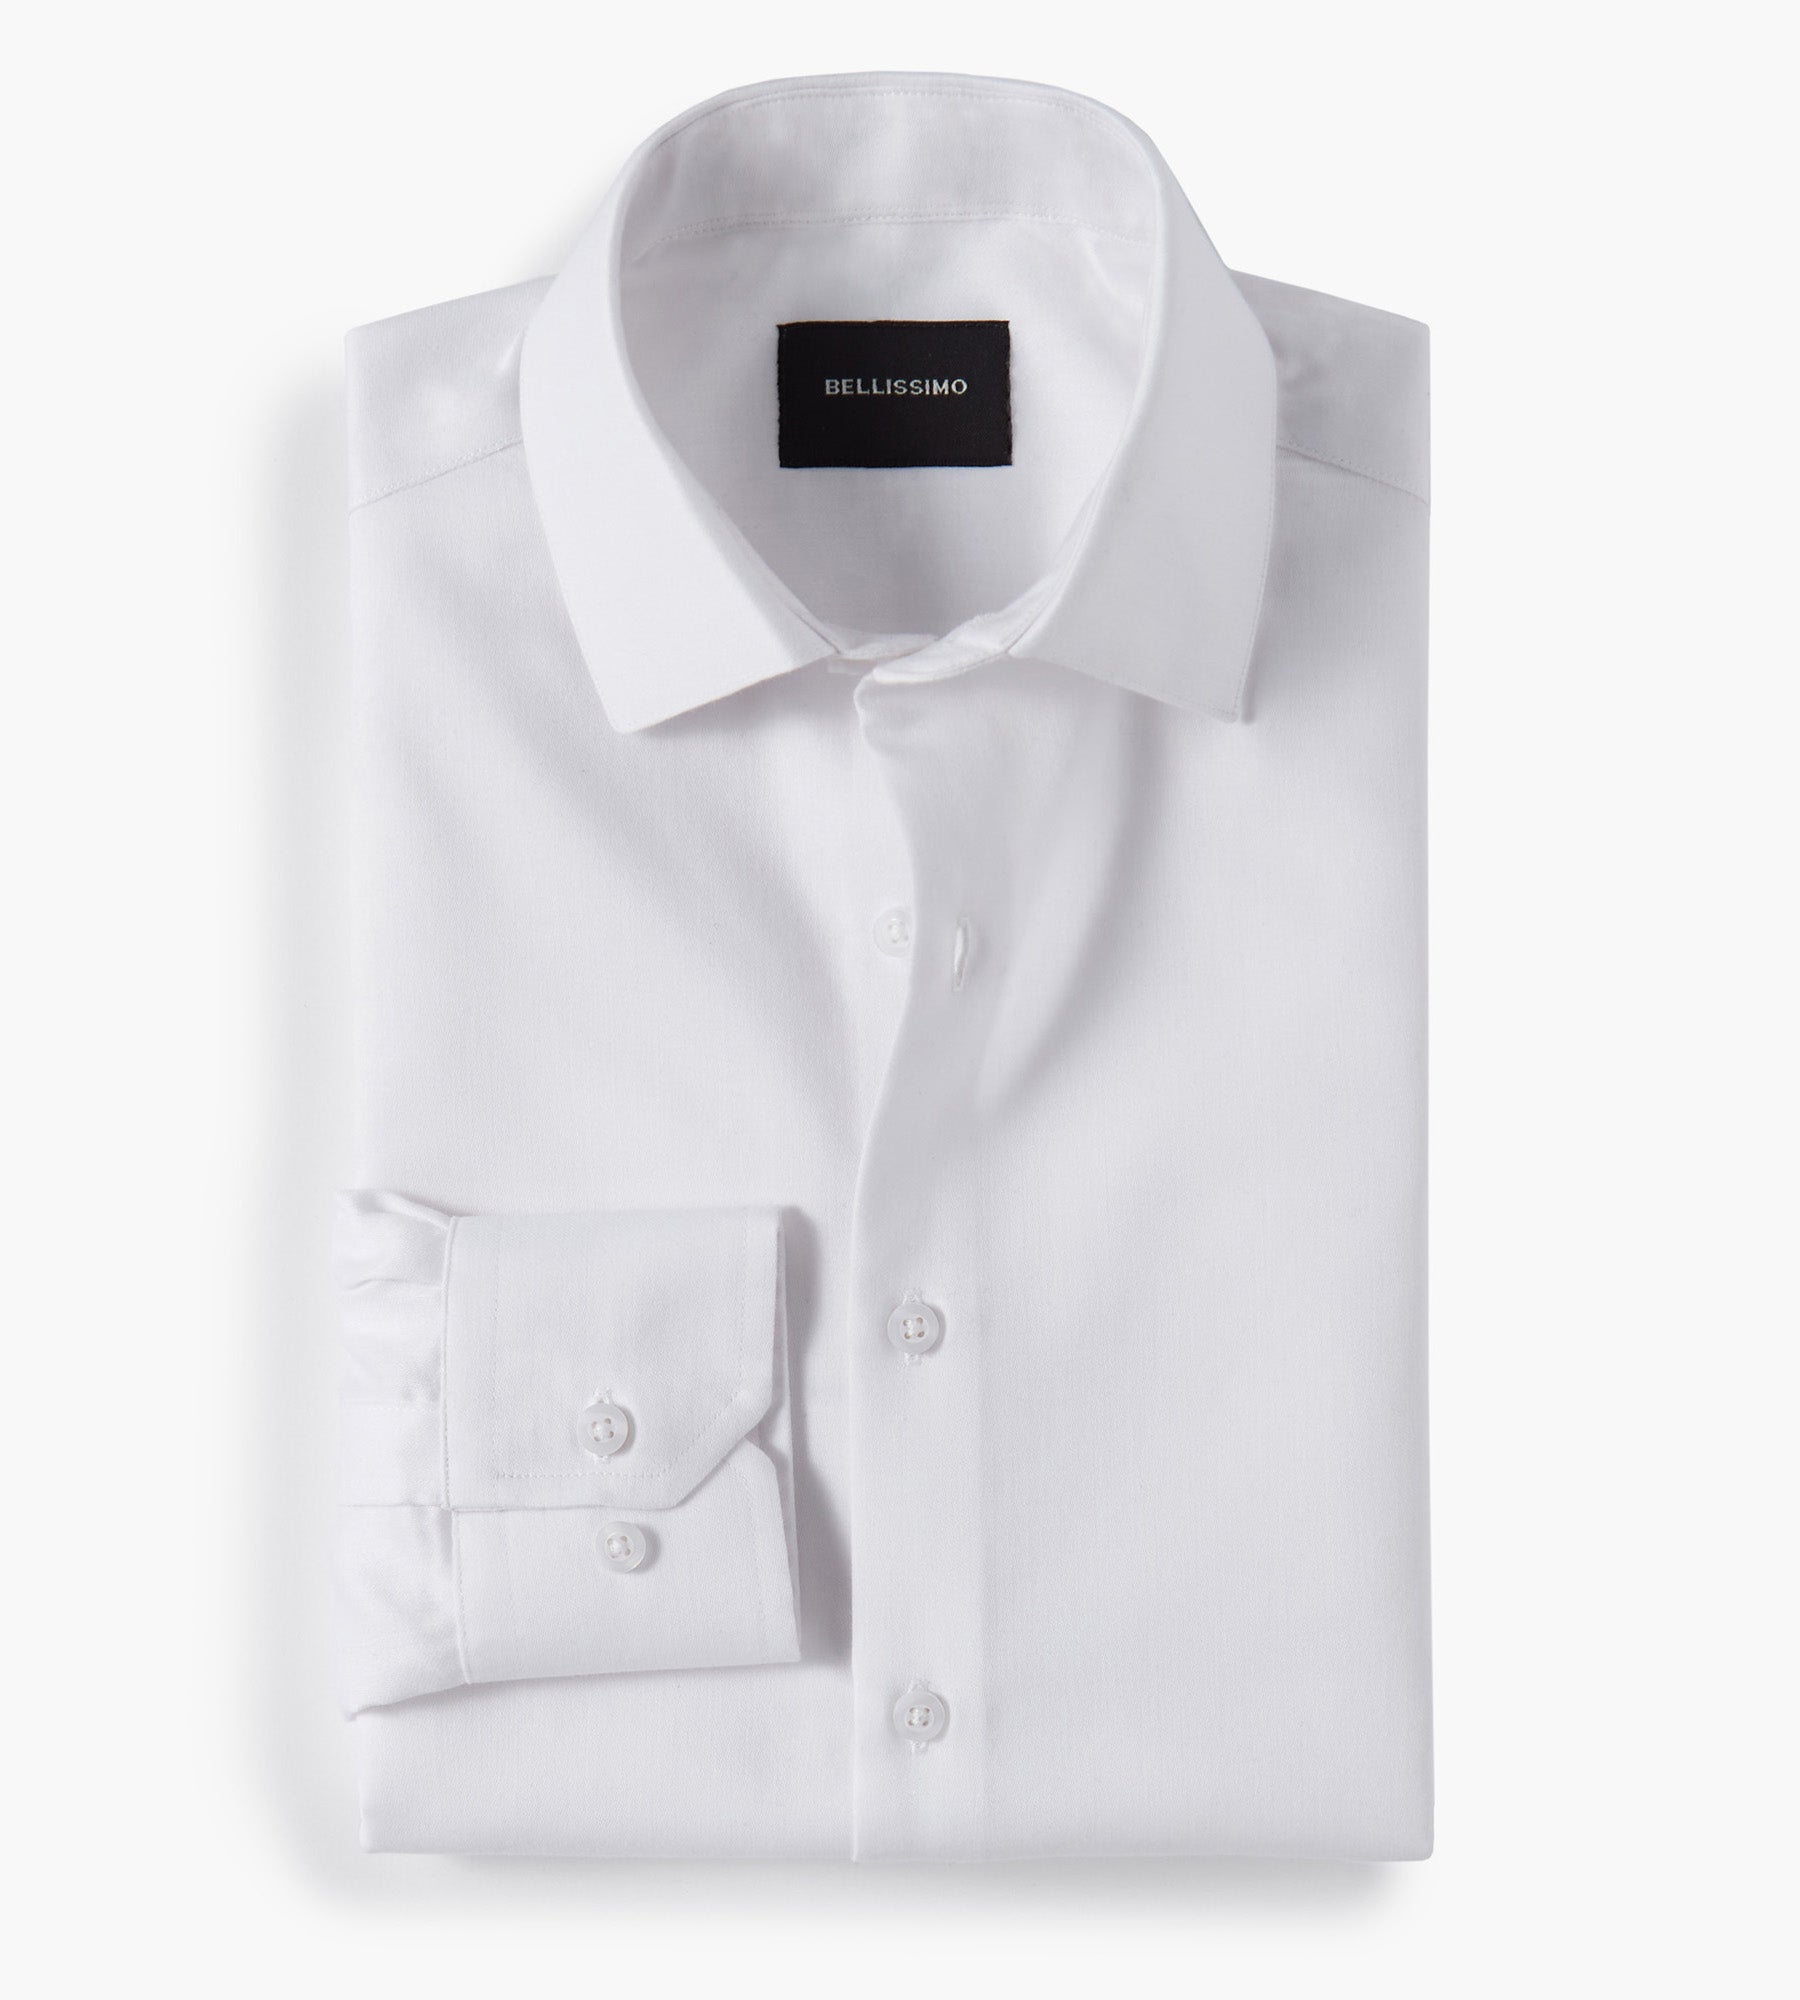 White white button down shirt folded.